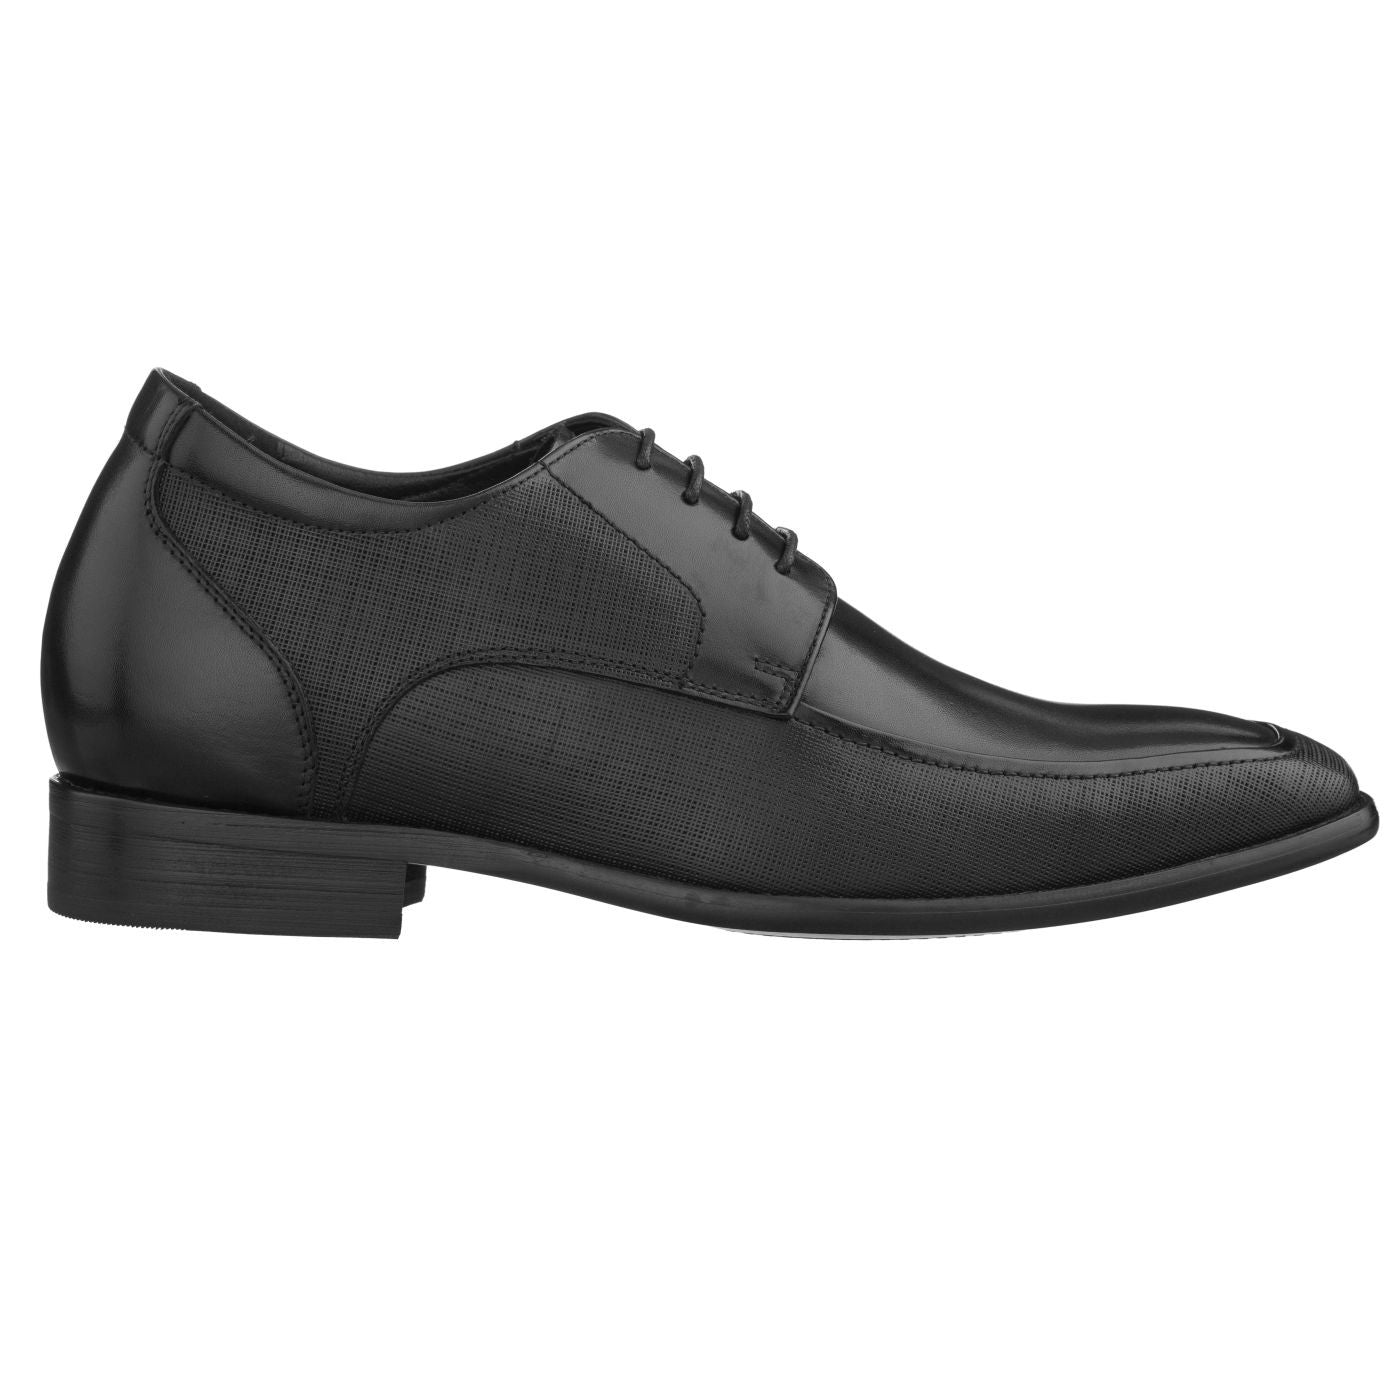 CALTO Black Dress Elevator Shoes Y5032 - TallMenShoes.com ...